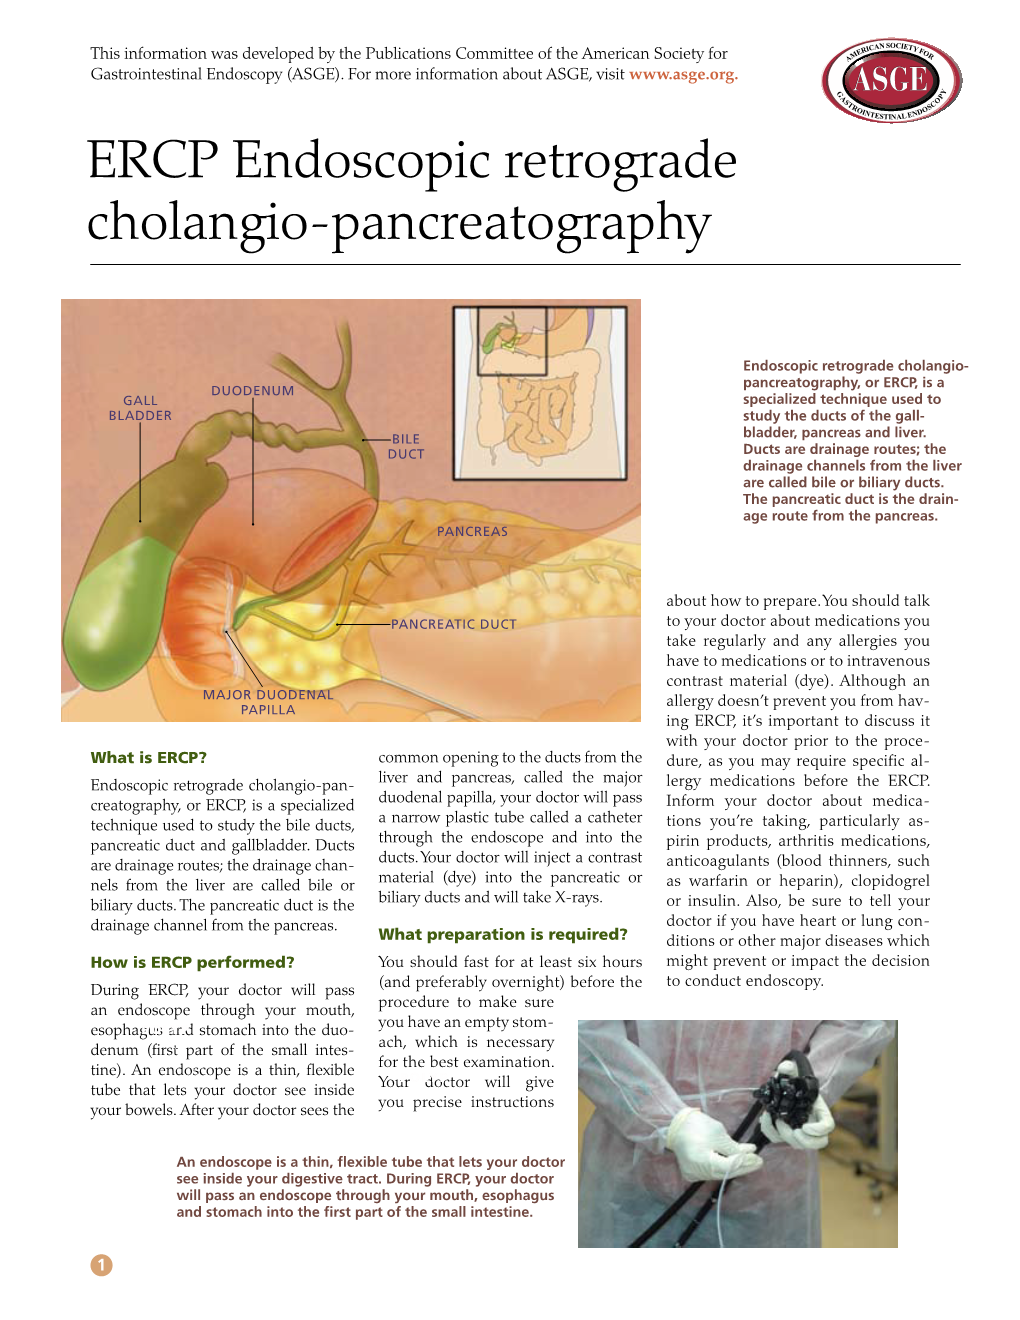 ERCP Endoscopic Retrograde Cholangio-Pancreatography